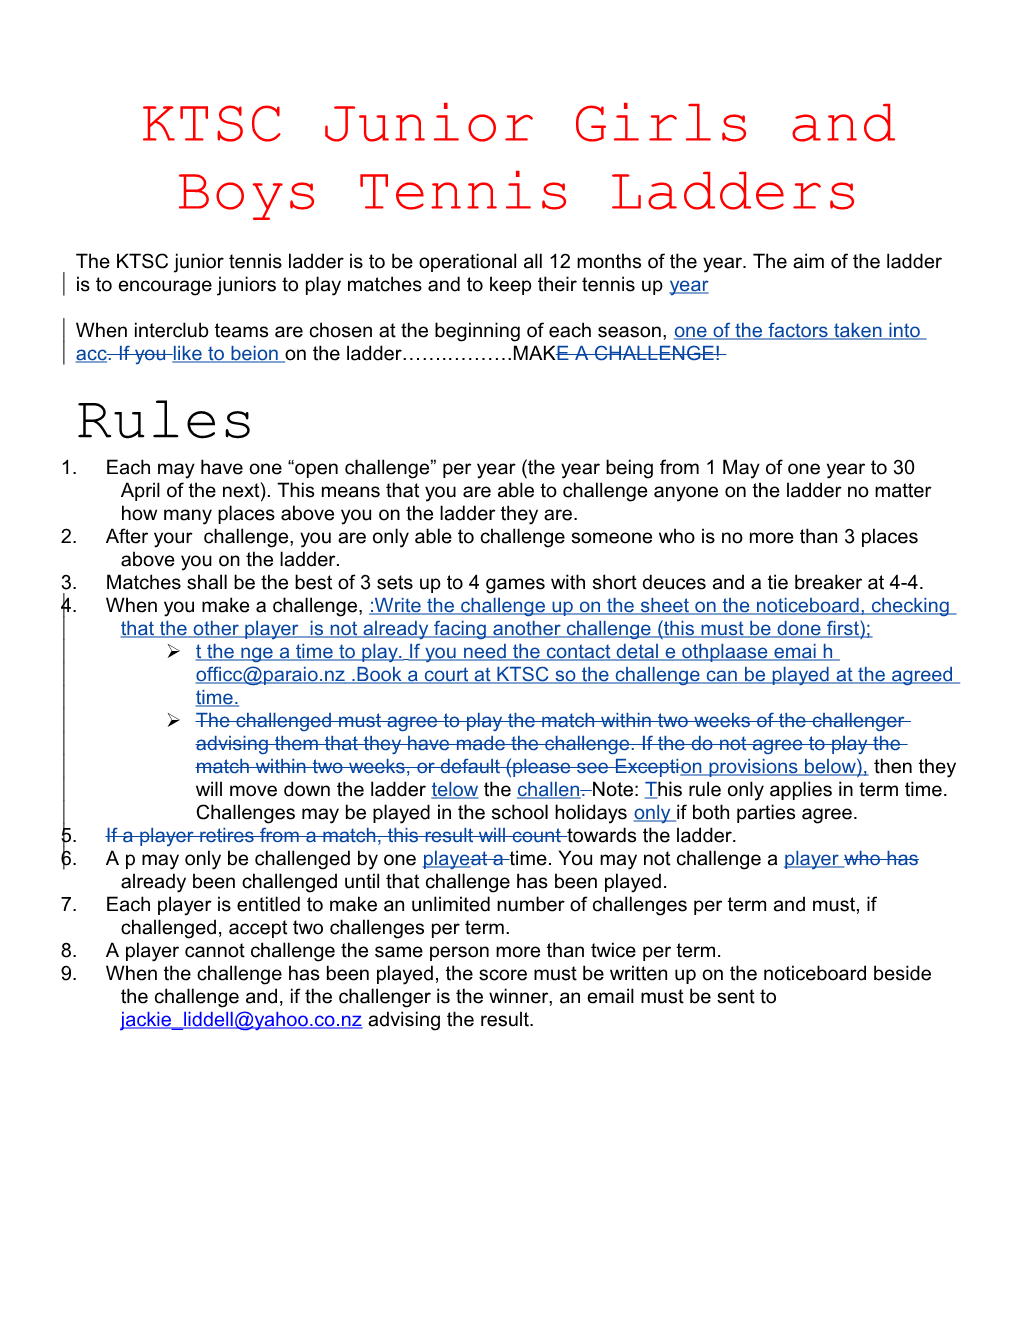 KTSC Junior Girls and Boys Tennis Ladders